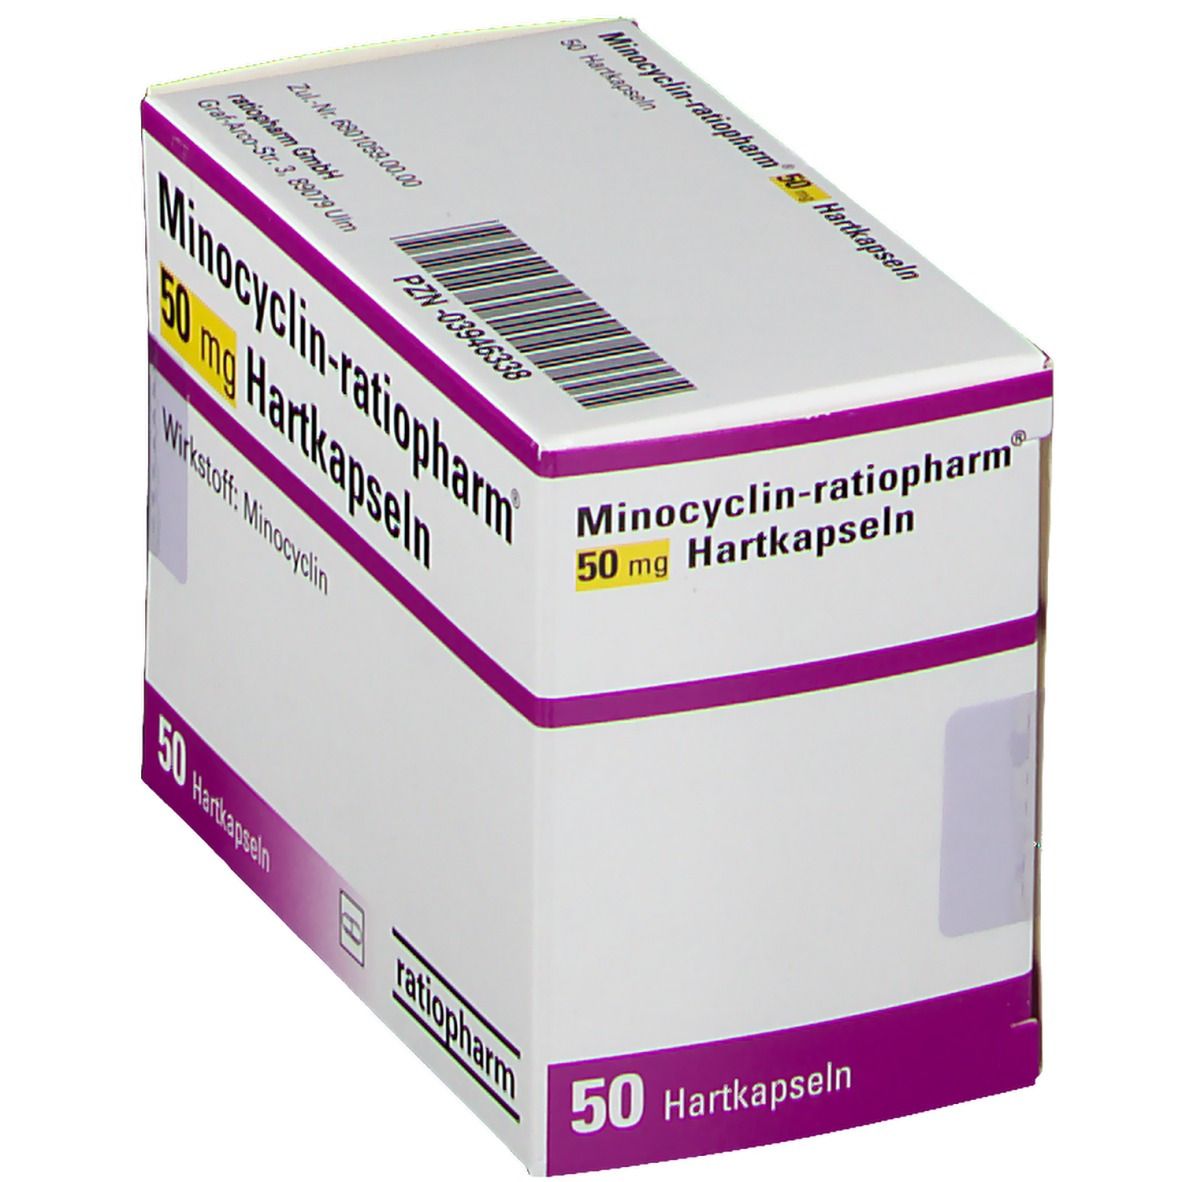 Minocyclin-ratiopharm 50 mg